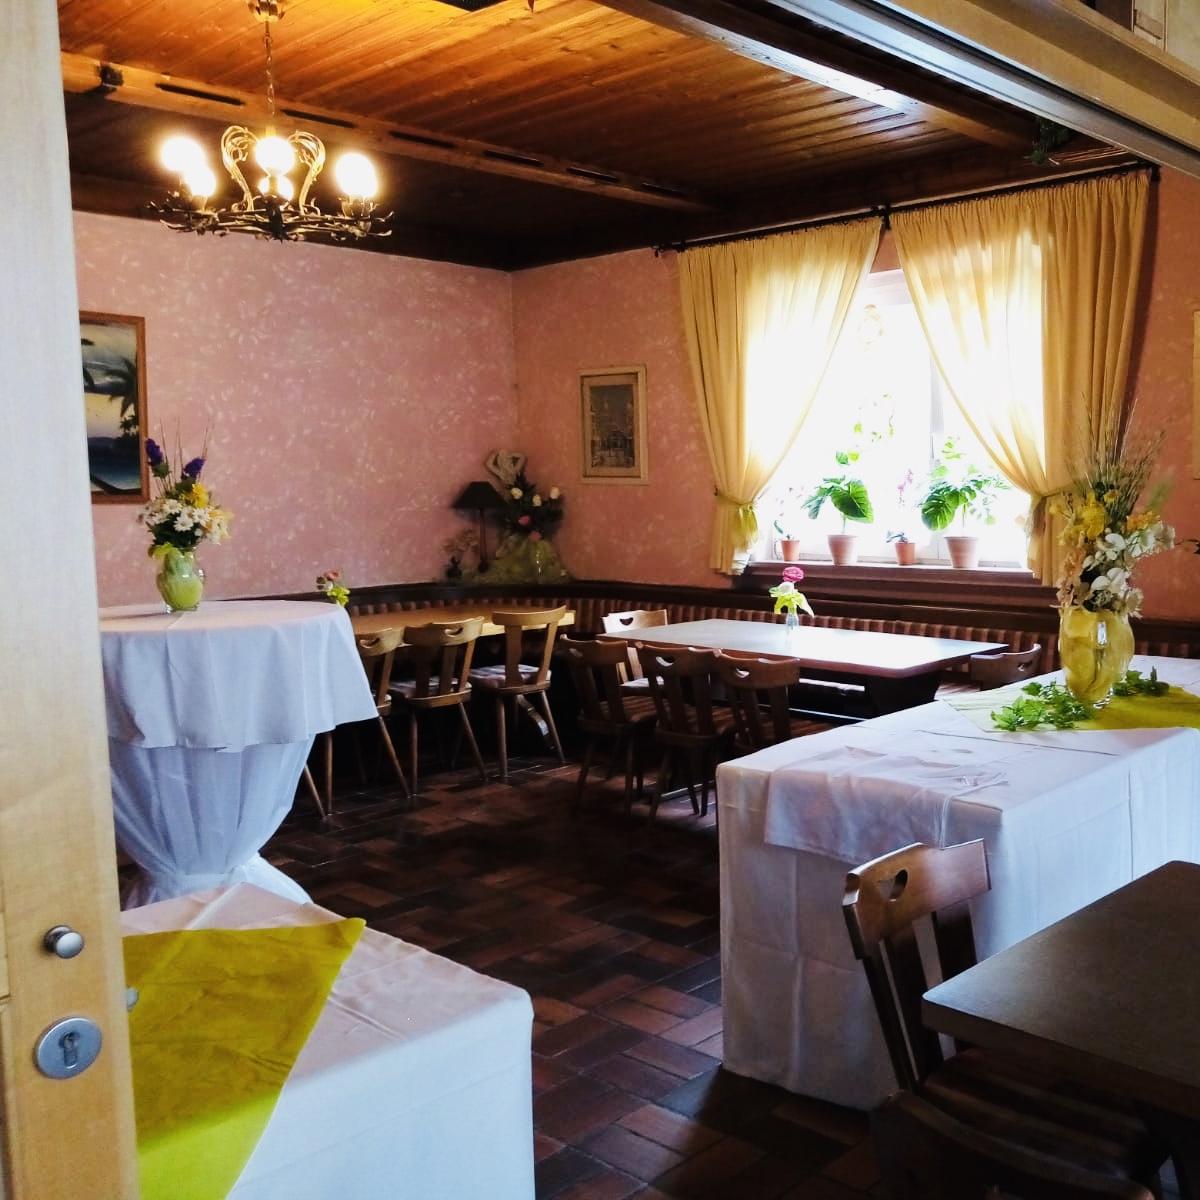 Restaurant "La Caprese" in Oberau